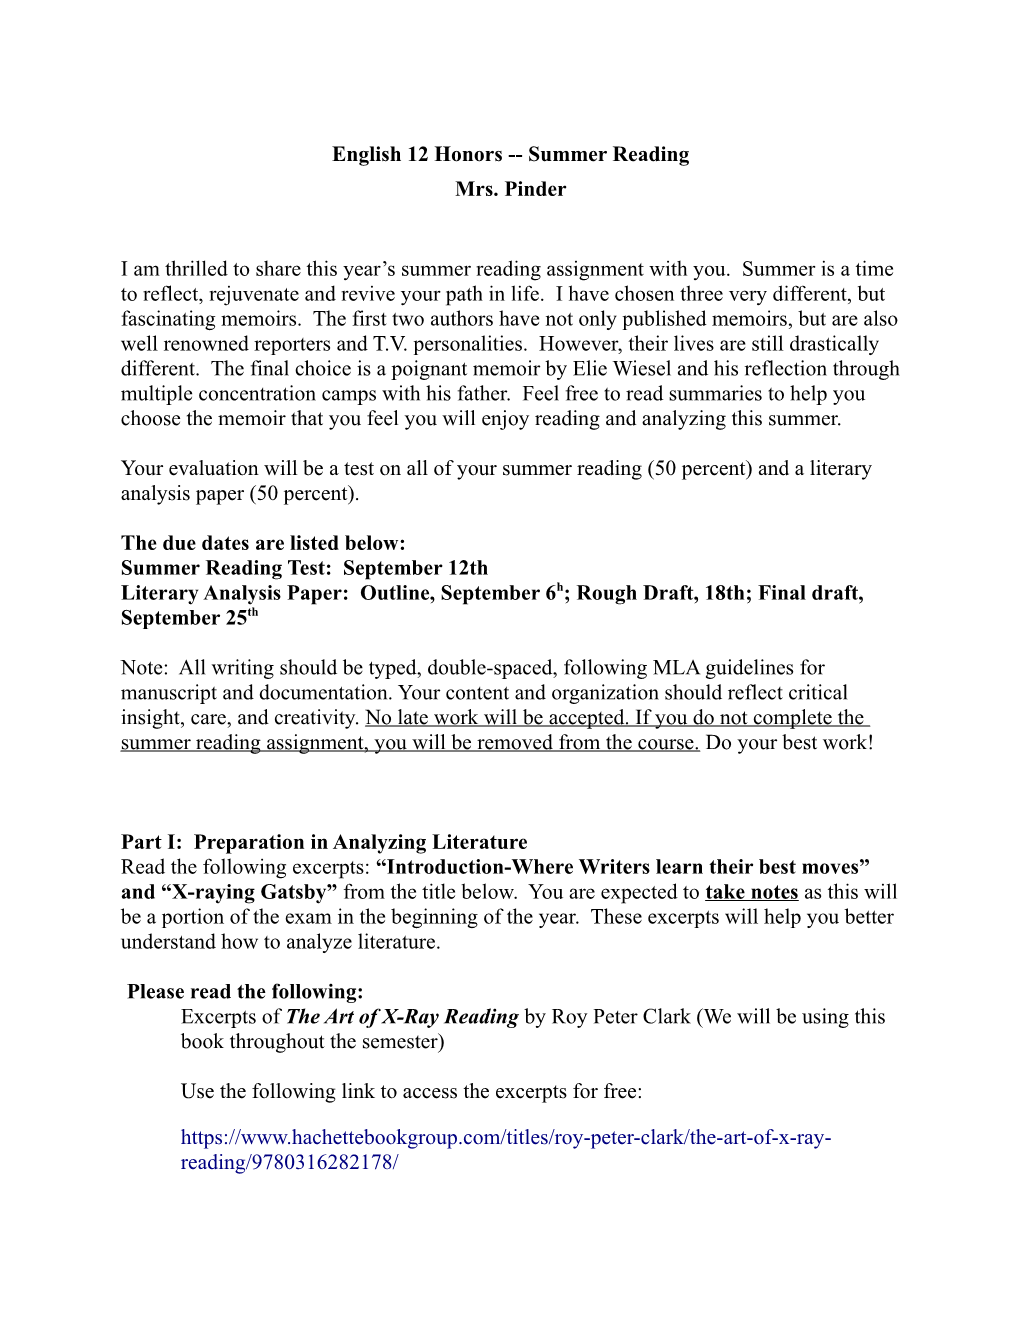 English 12 Honors Summer Reading